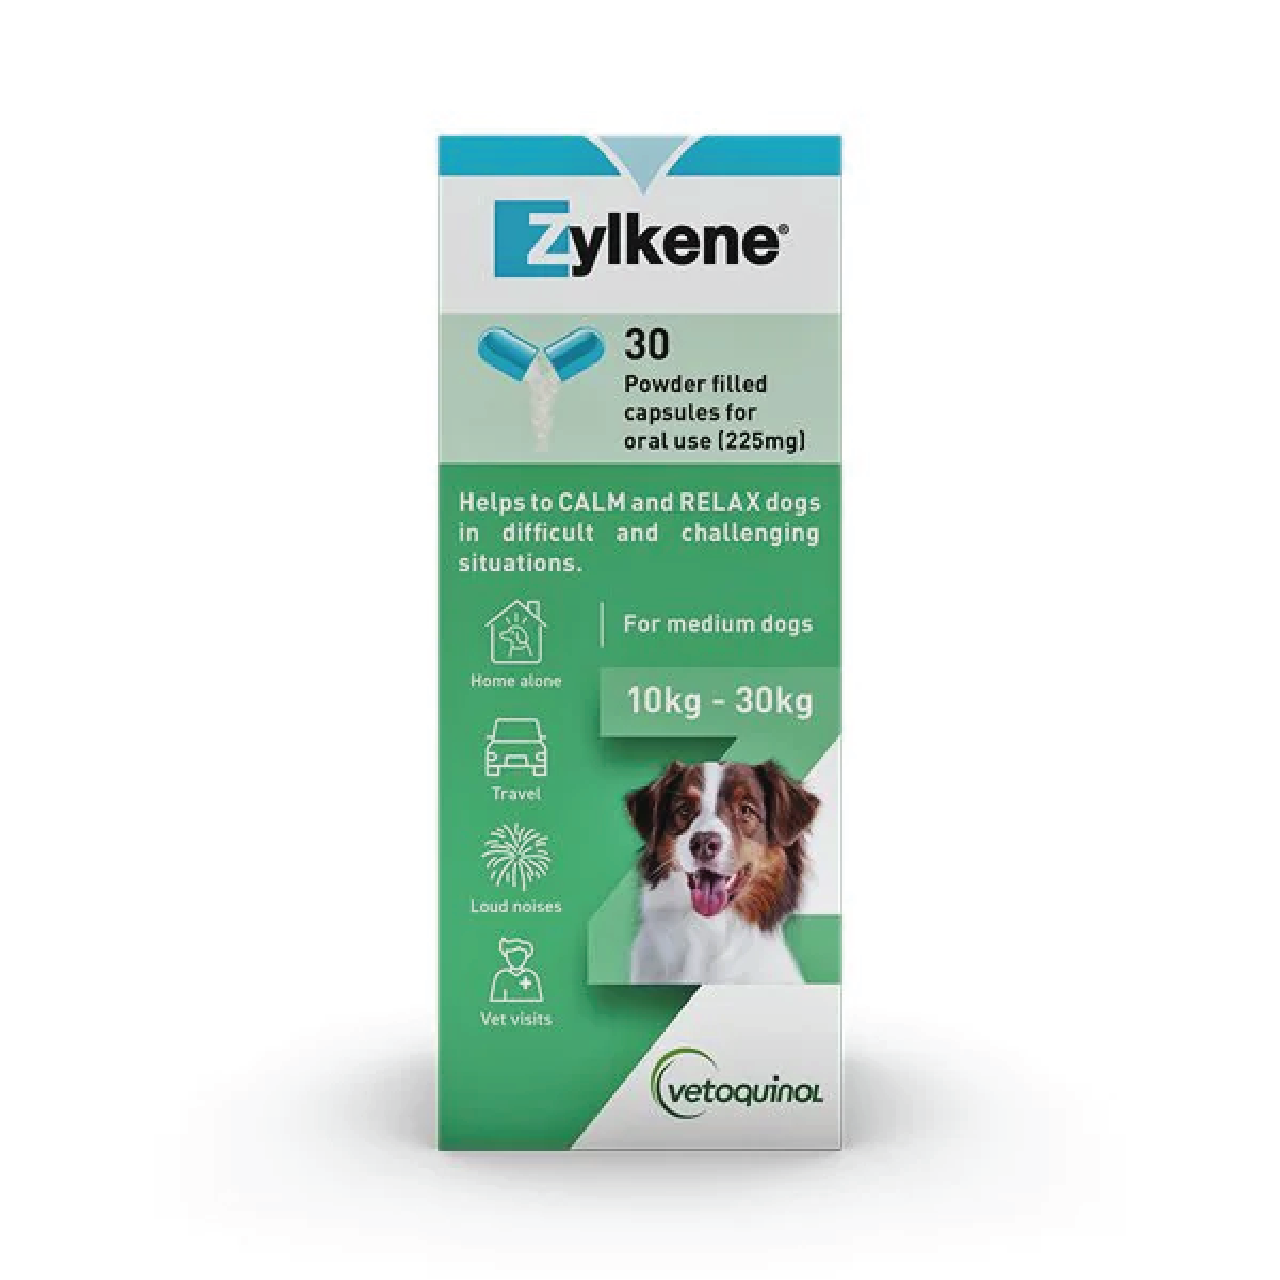 20% rabat på Zylkene ernæringstilskud til hunde 225 mg - 30 kapsler hos Atlantic Pet Products